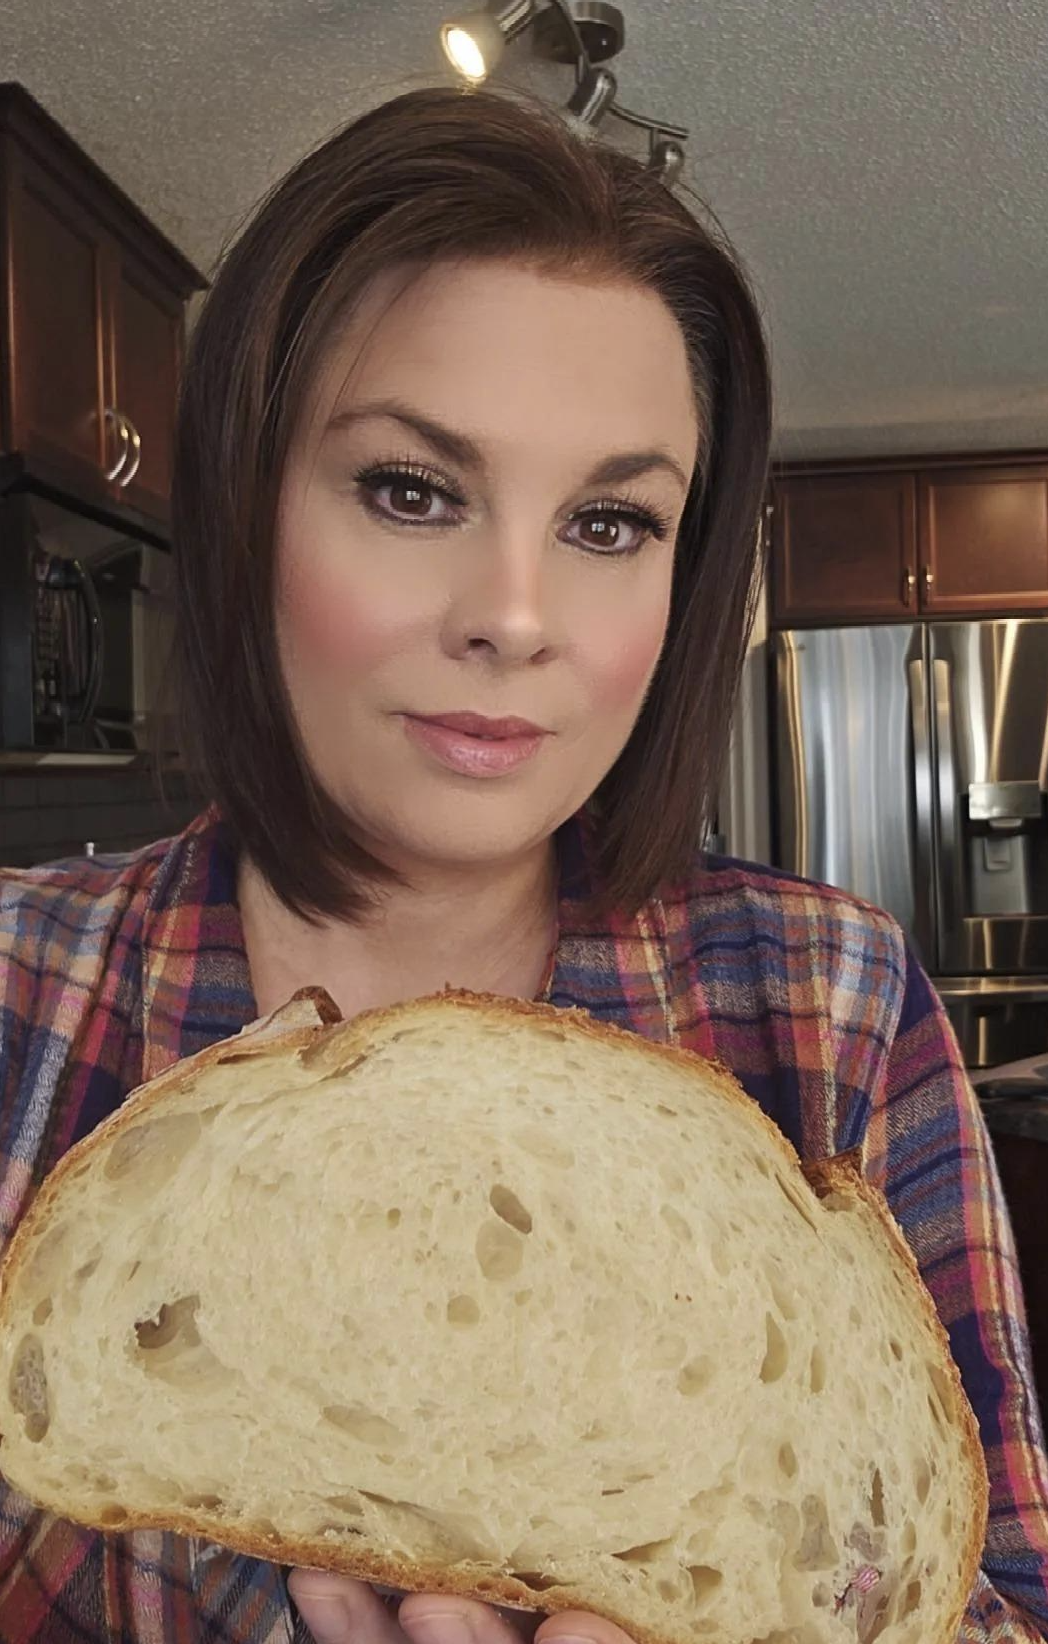 sourdough bread influencer in edmonton alberta canada kristy buy summit sourdough starter online home baker 8